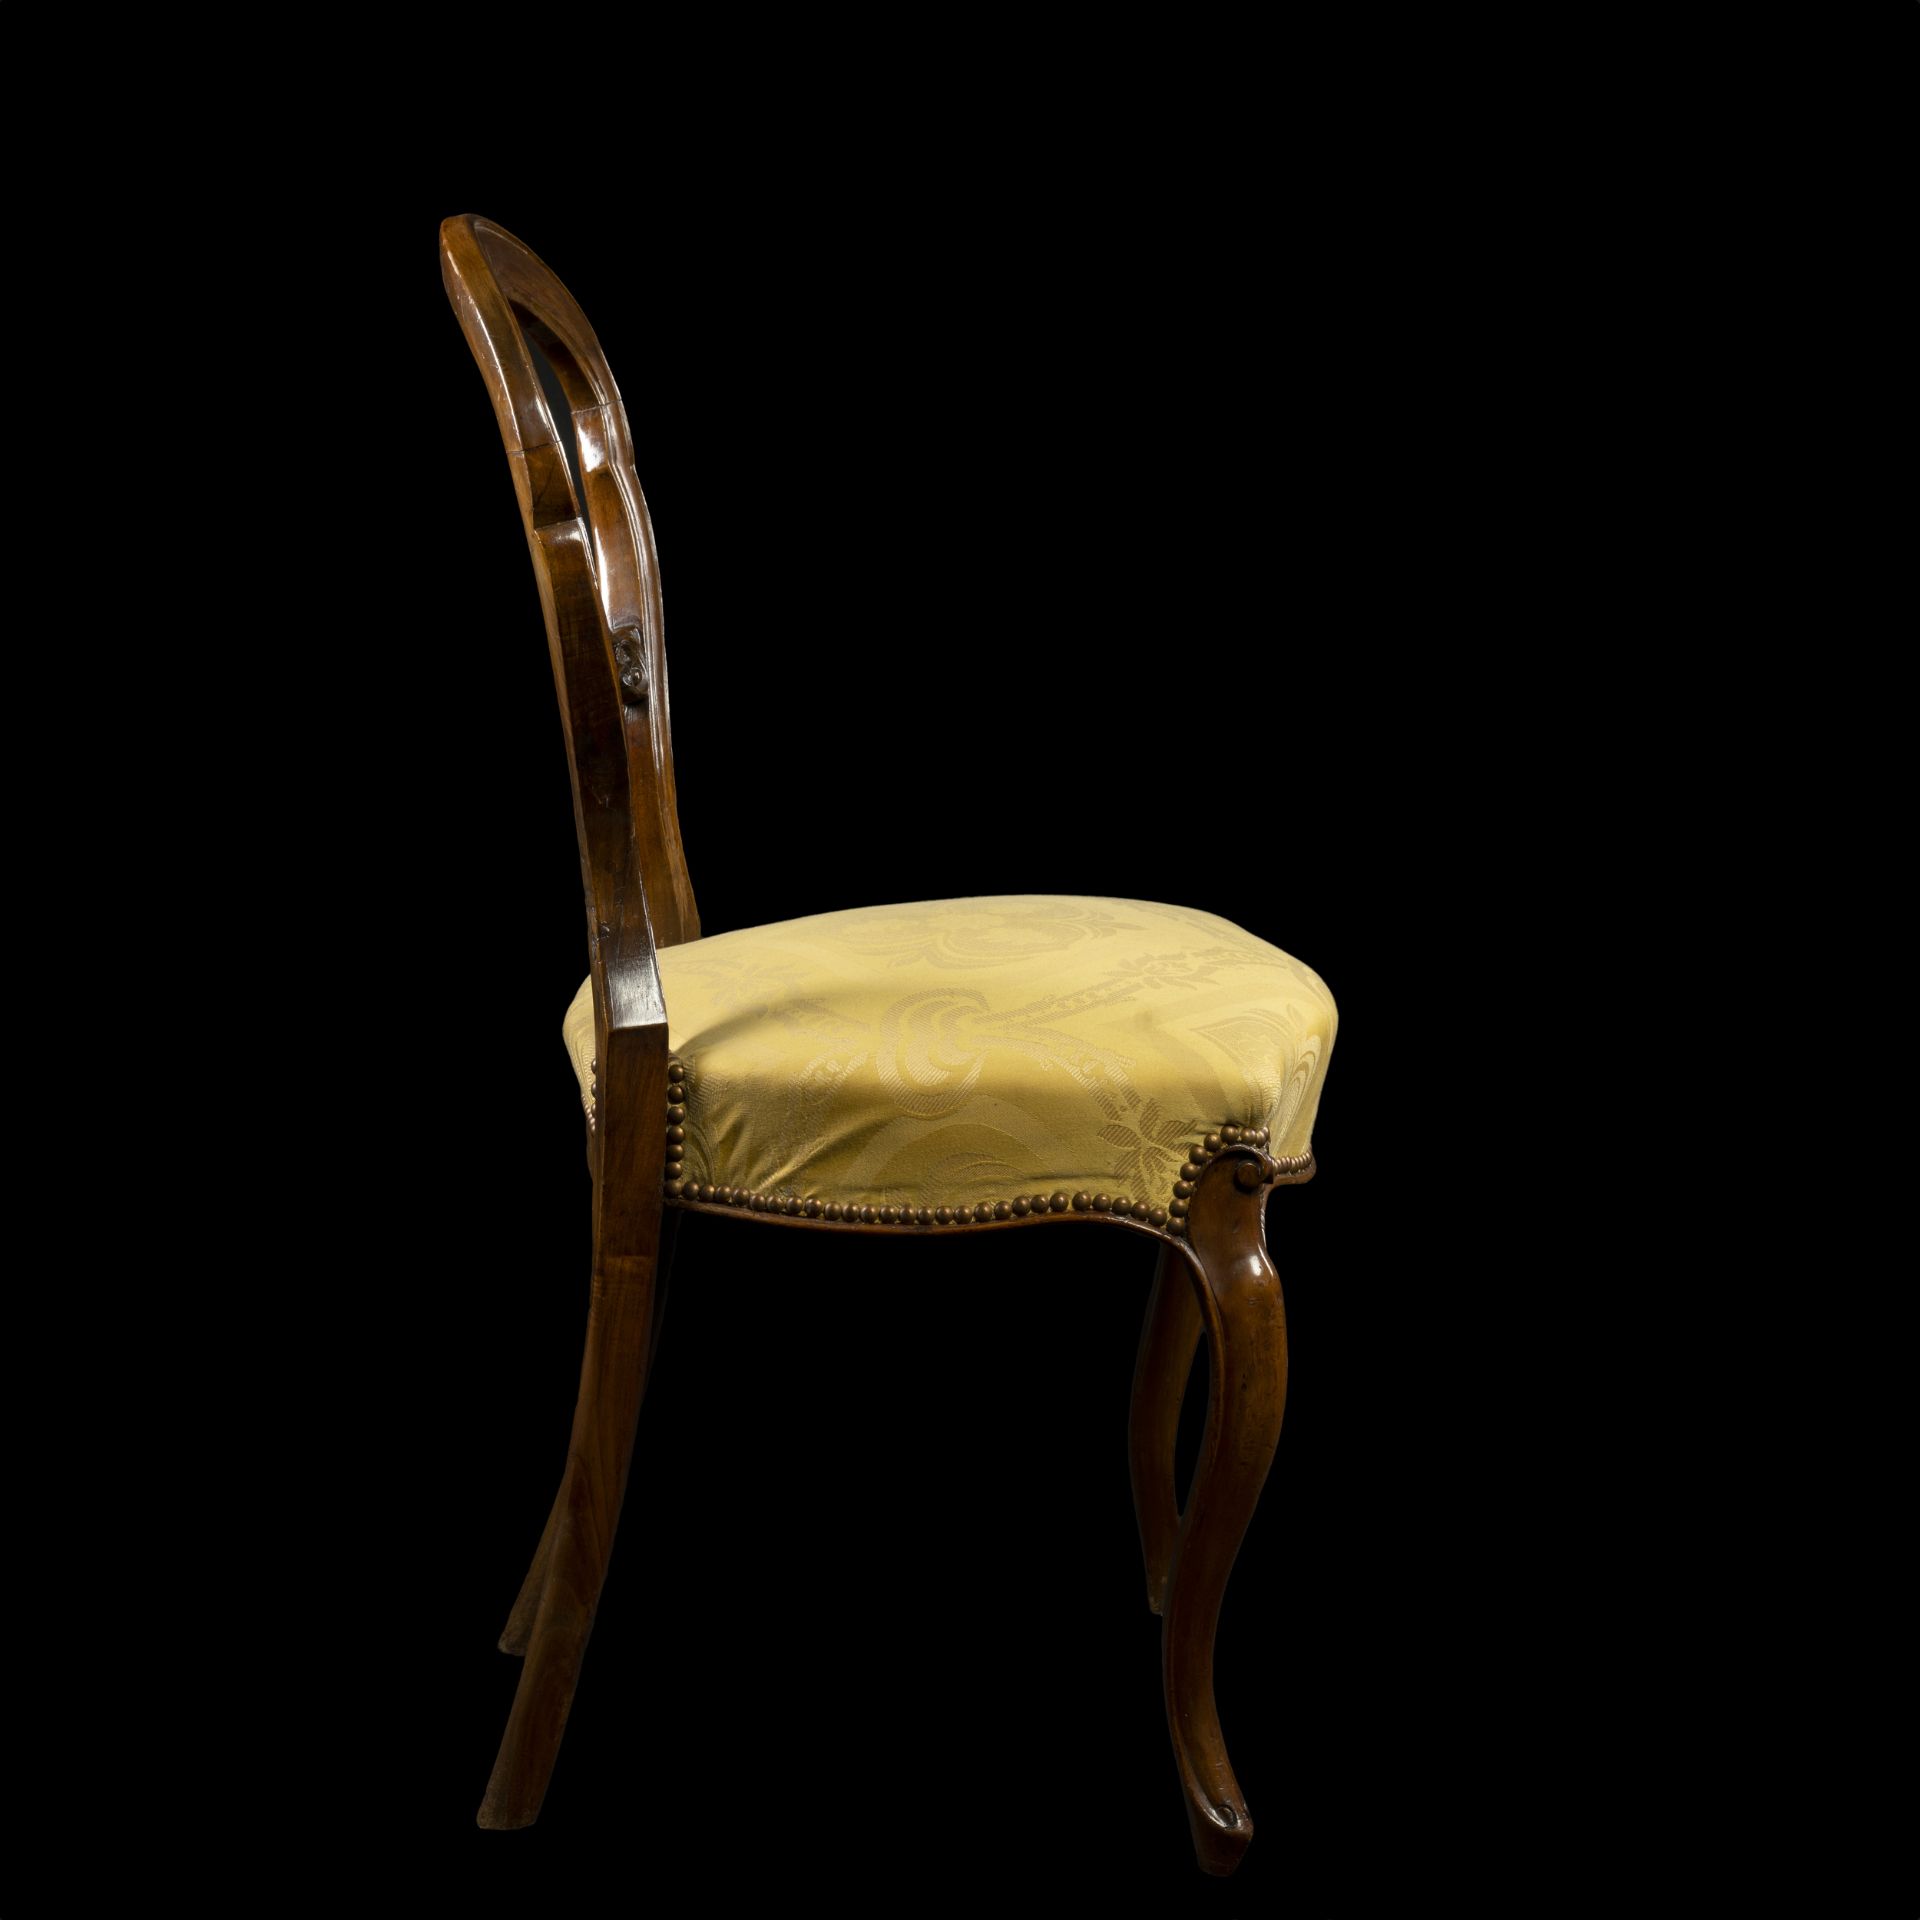 Sei sedie in noce, Inghilterra, XIX secolo - Bild 2 aus 2